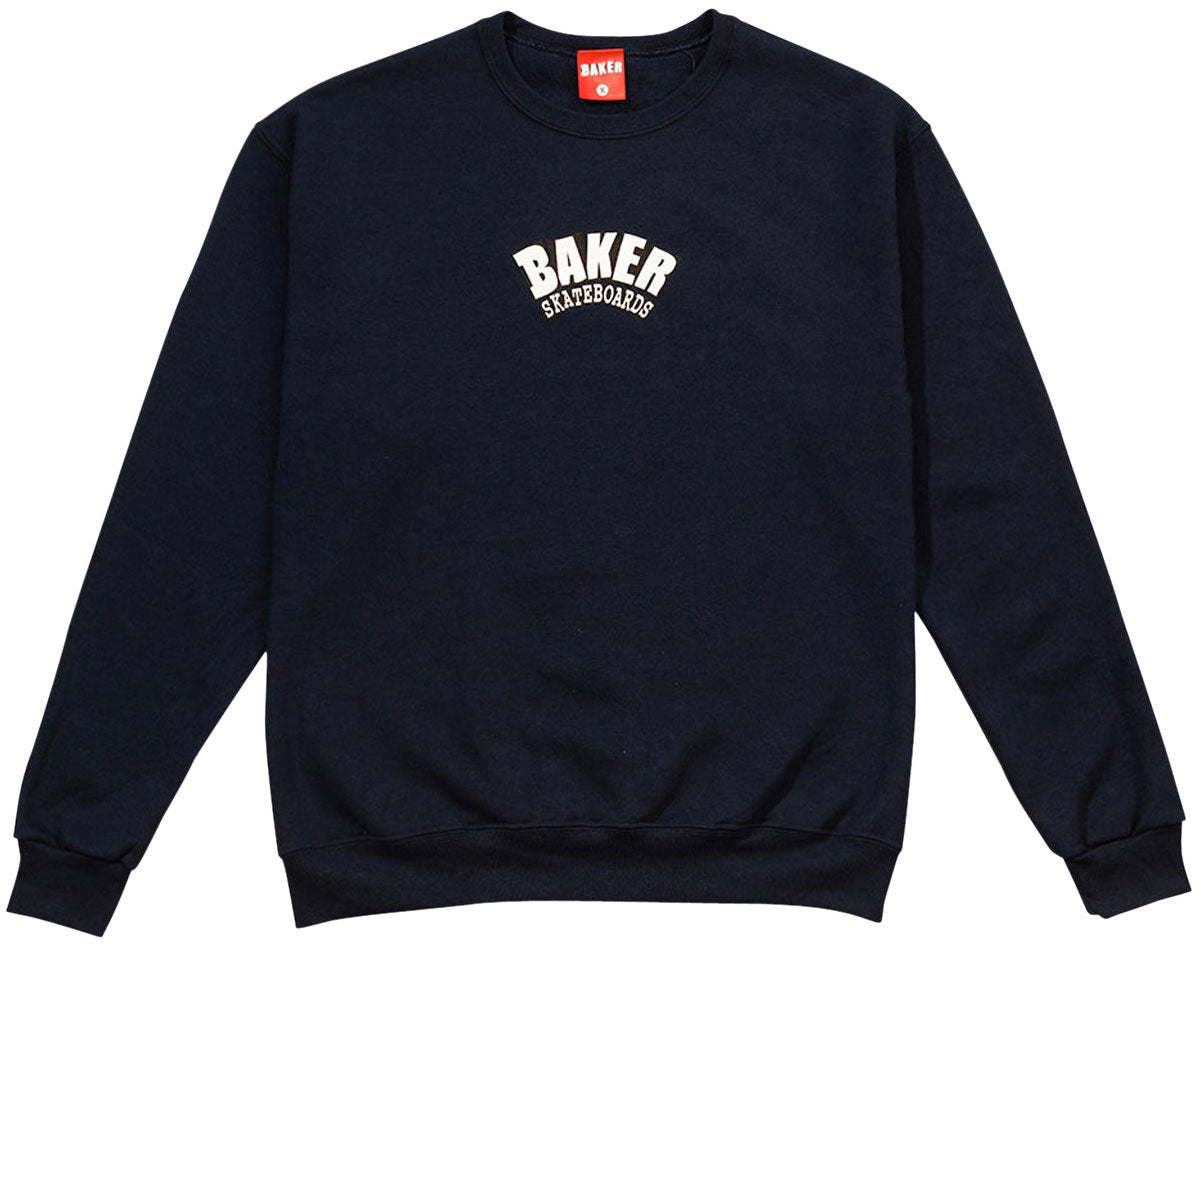 Baker Arch Sweatshirt - Navy image 1